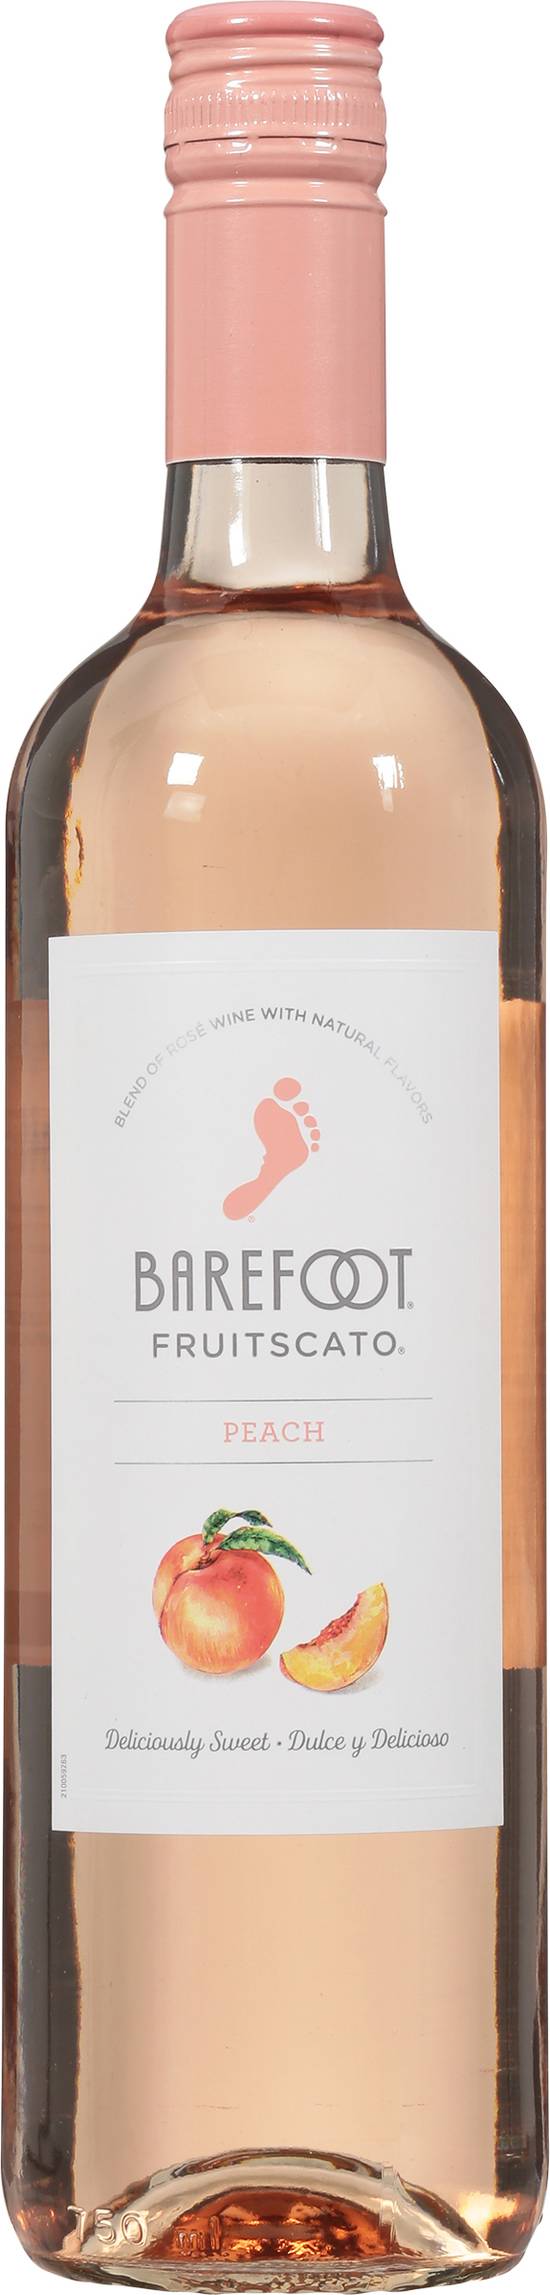 Barefoot Fruitscato Peach Rose Wine 2020 (750 ml)